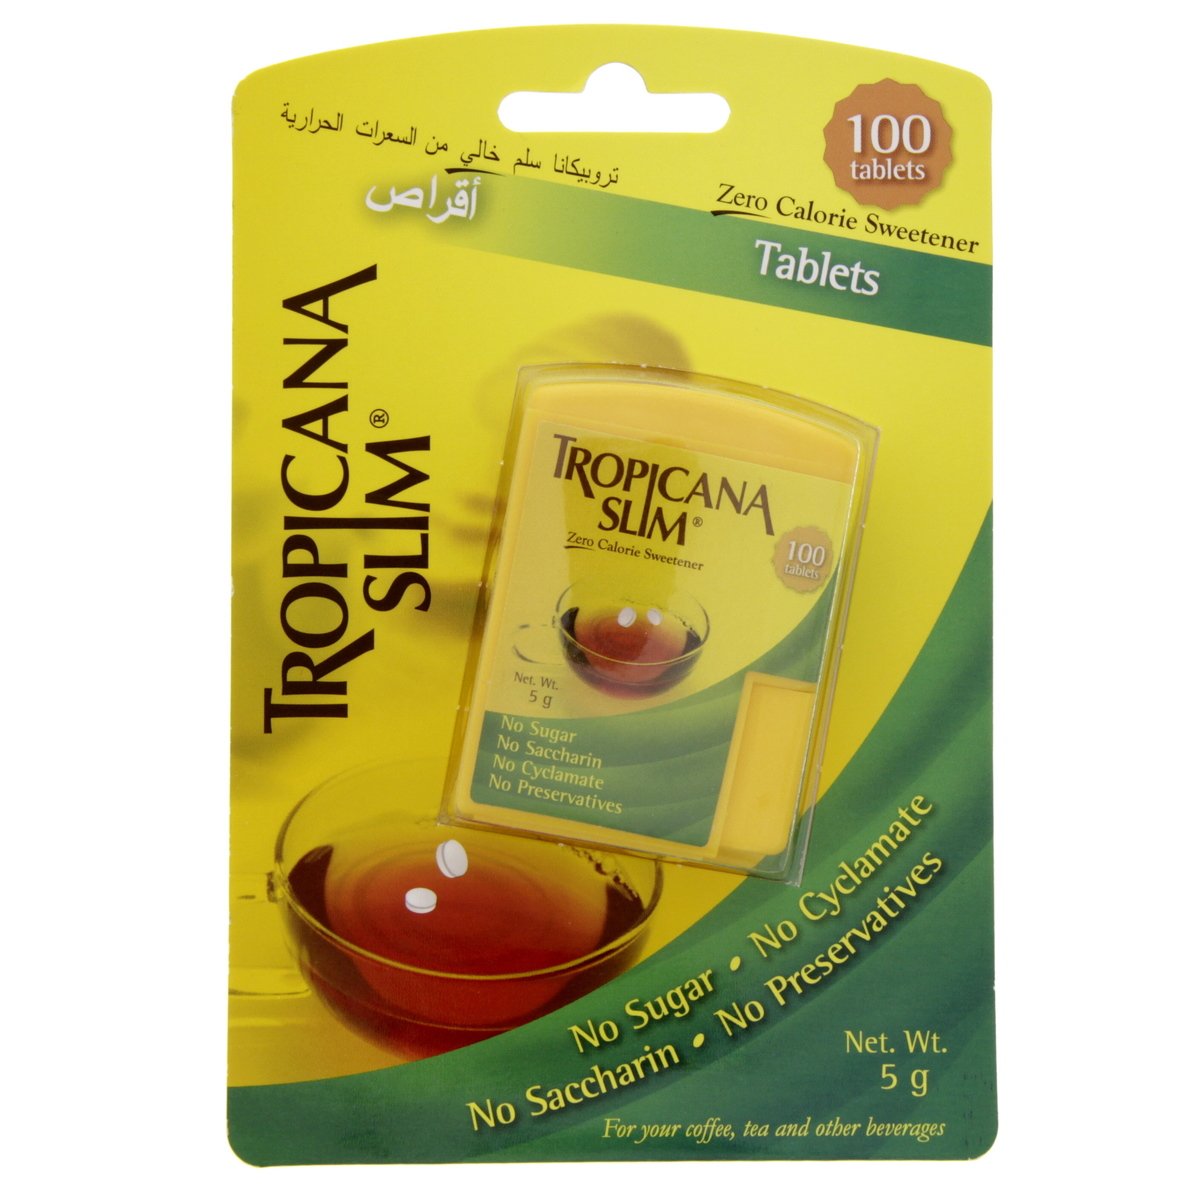 Tropicana Slim Zero Calorie Sweetener Tablets 100 pcs